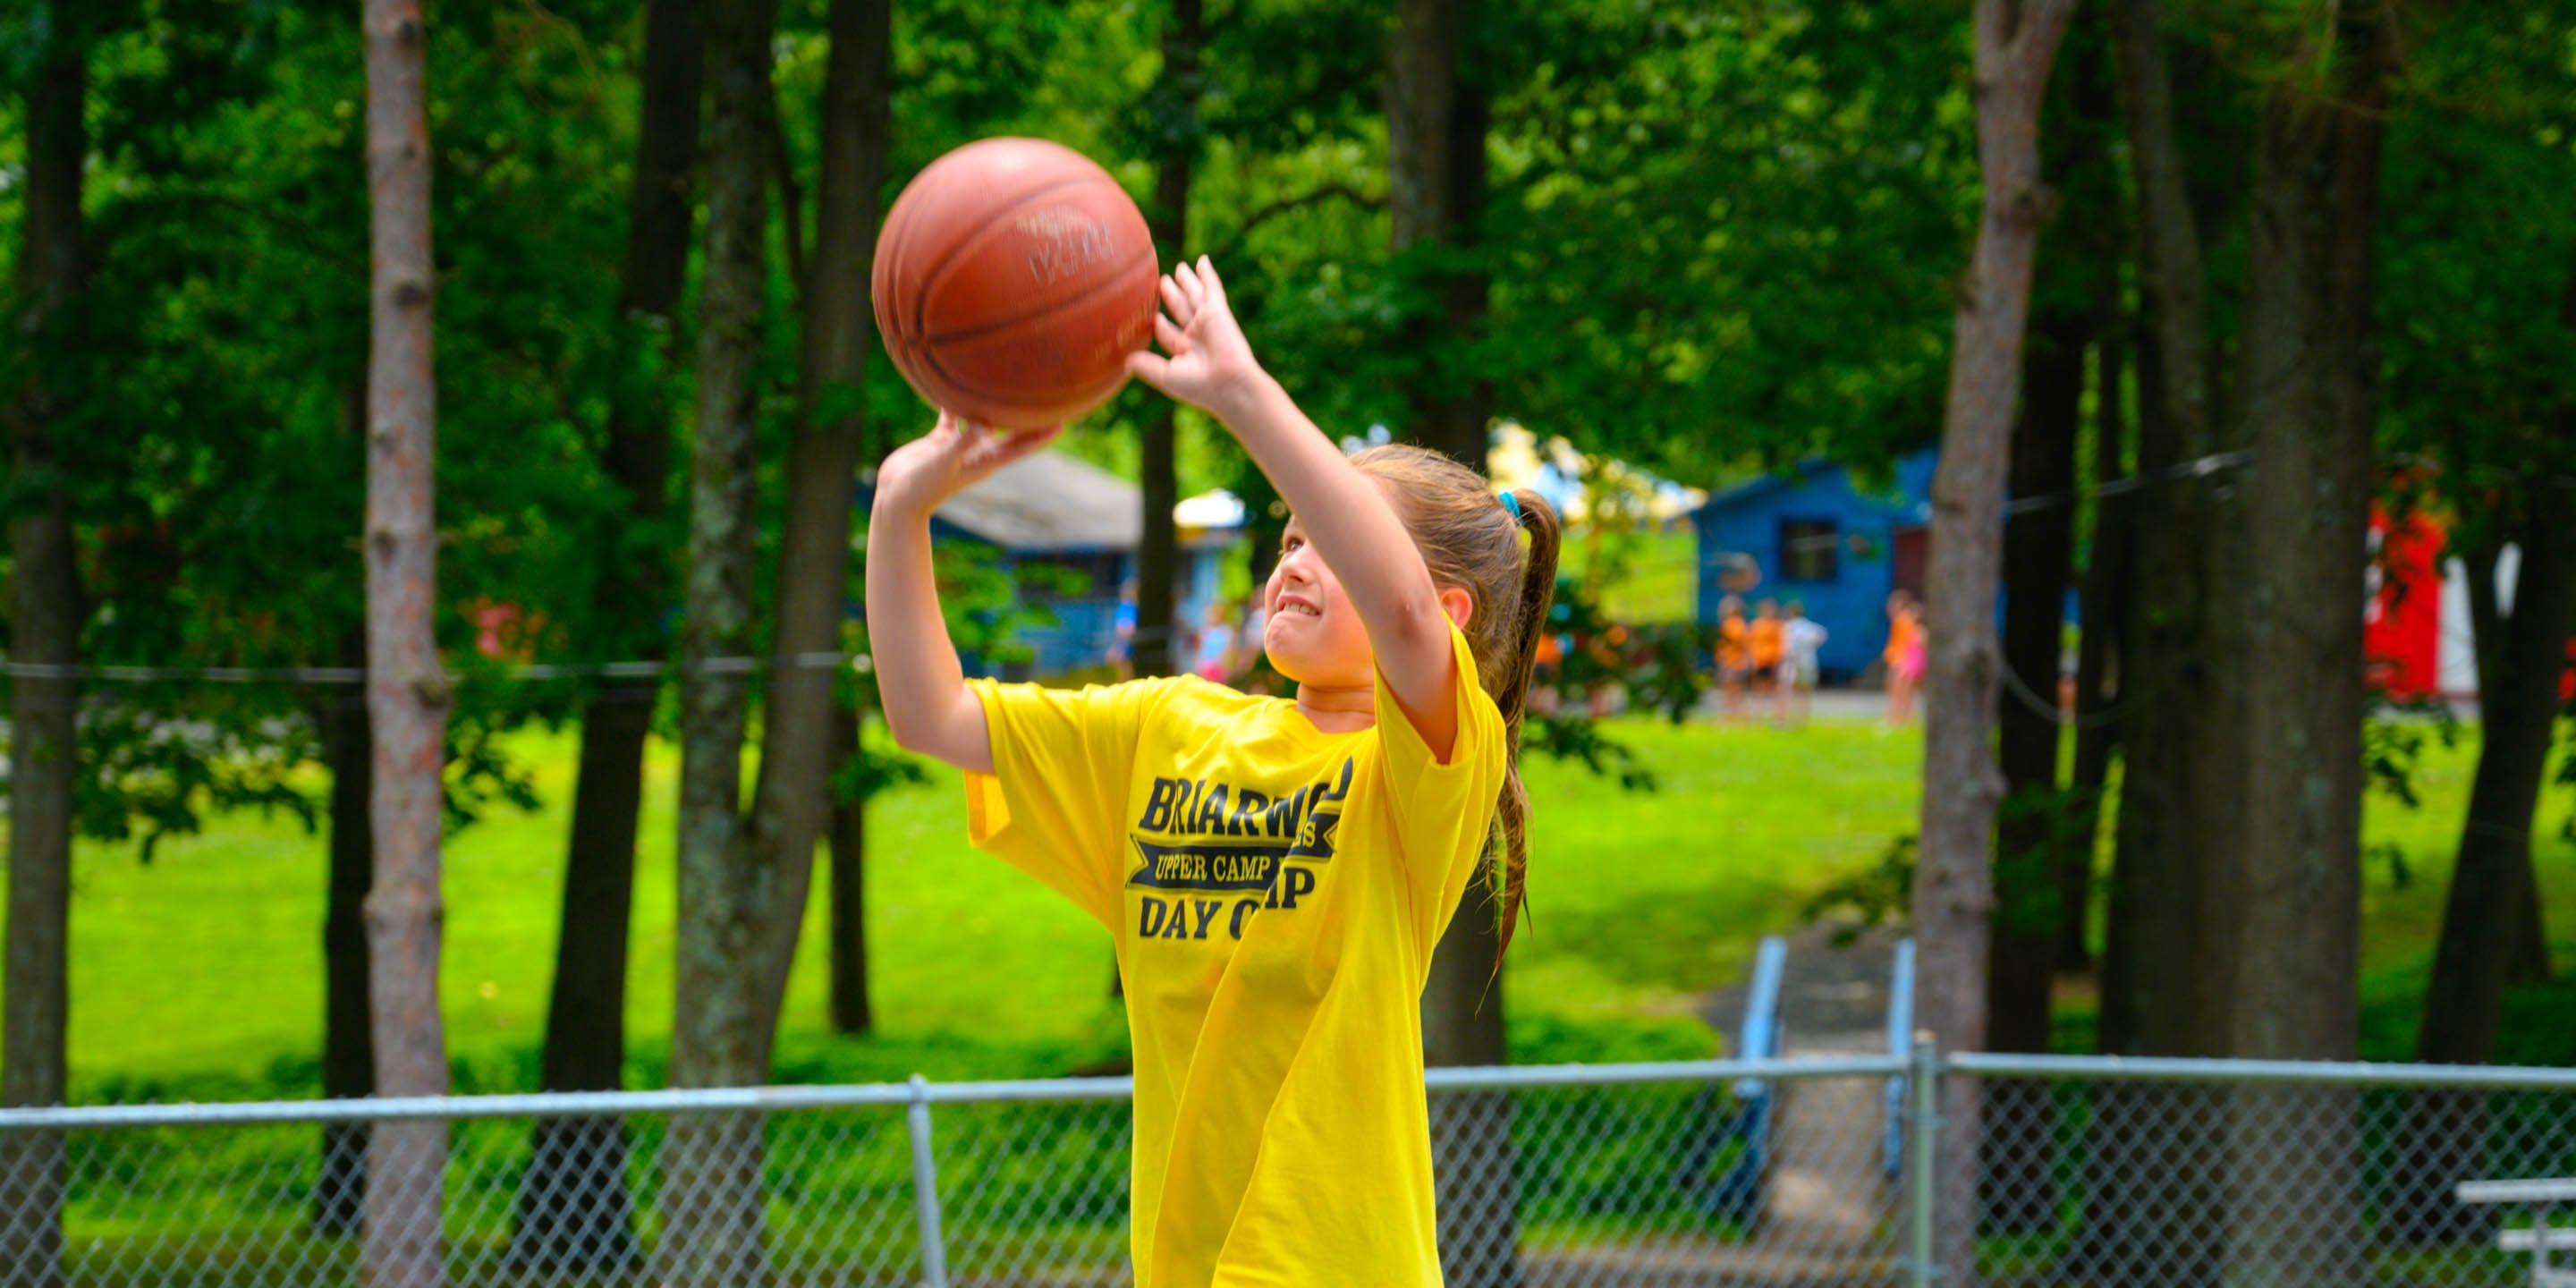 Camper playing basketball